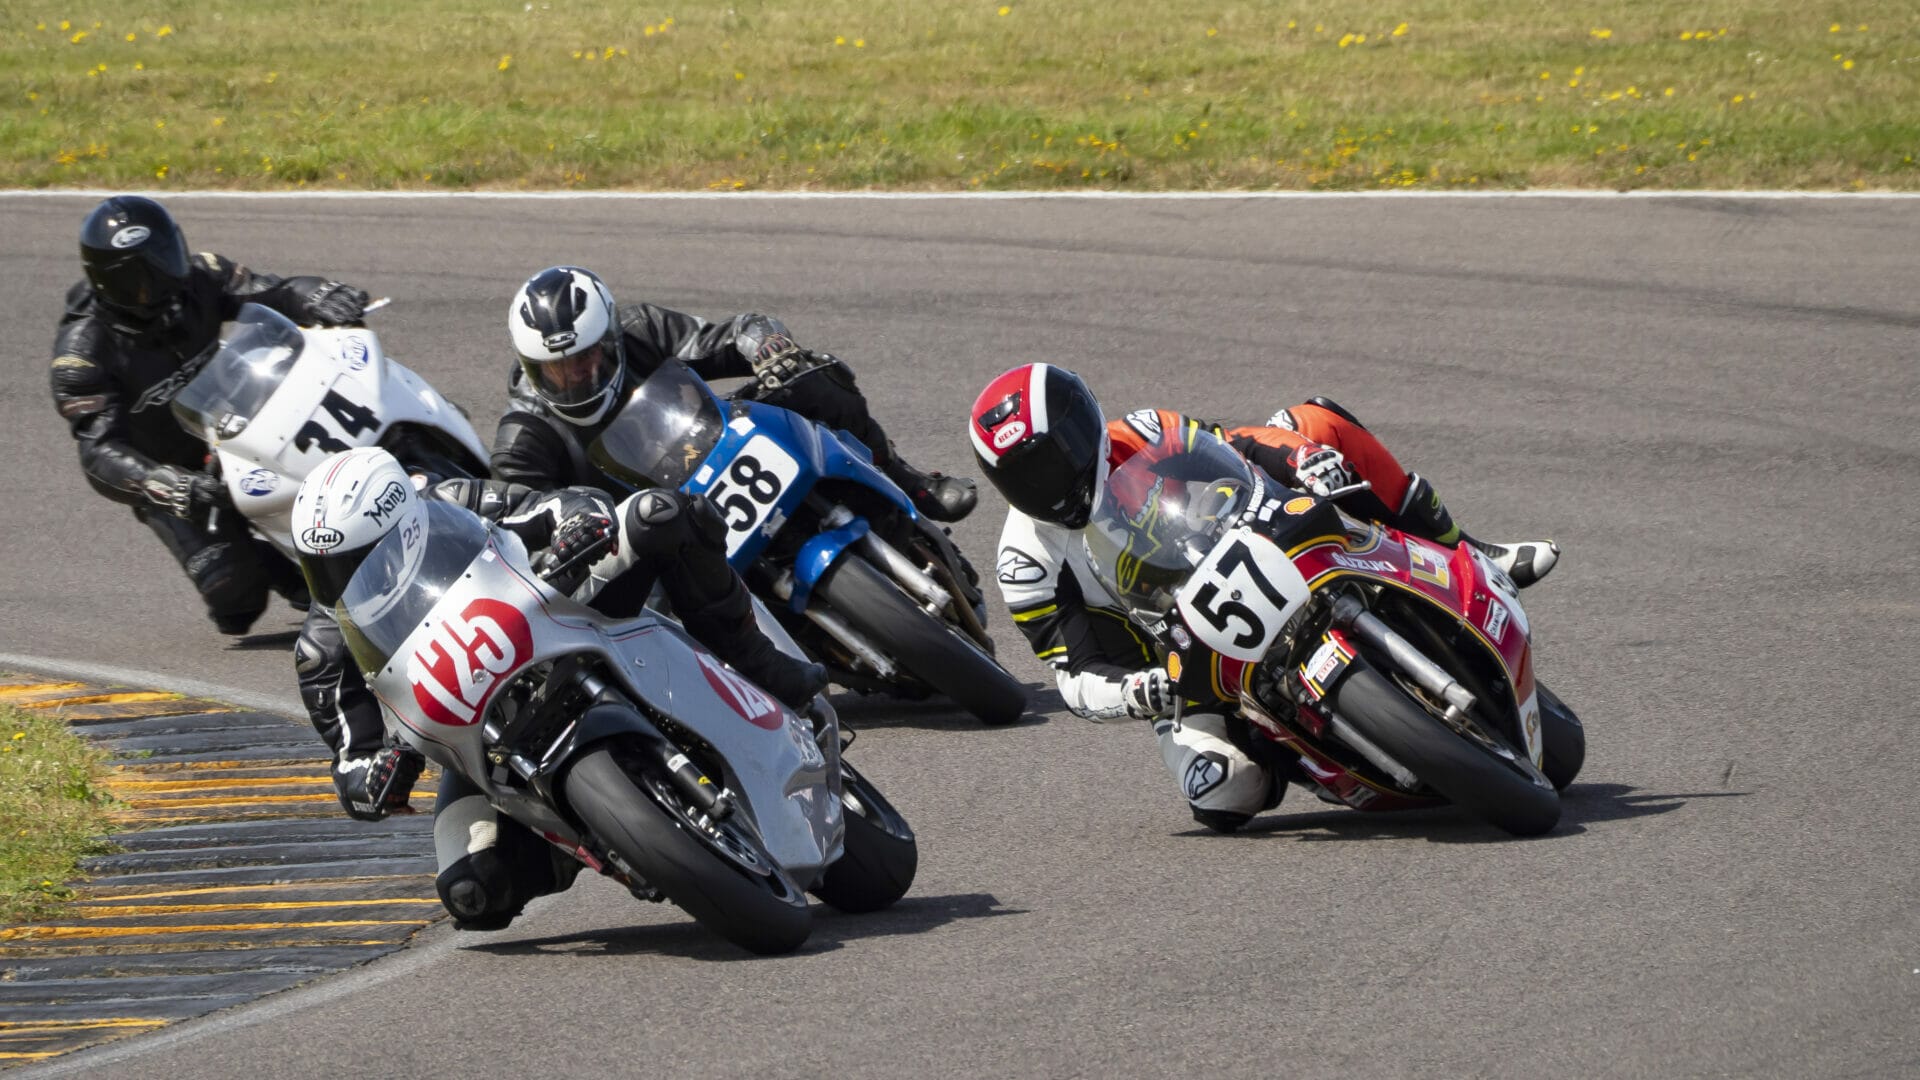 Photo of 4 motorbikes racing around a corner - Action Photography - Classic Bike Racing